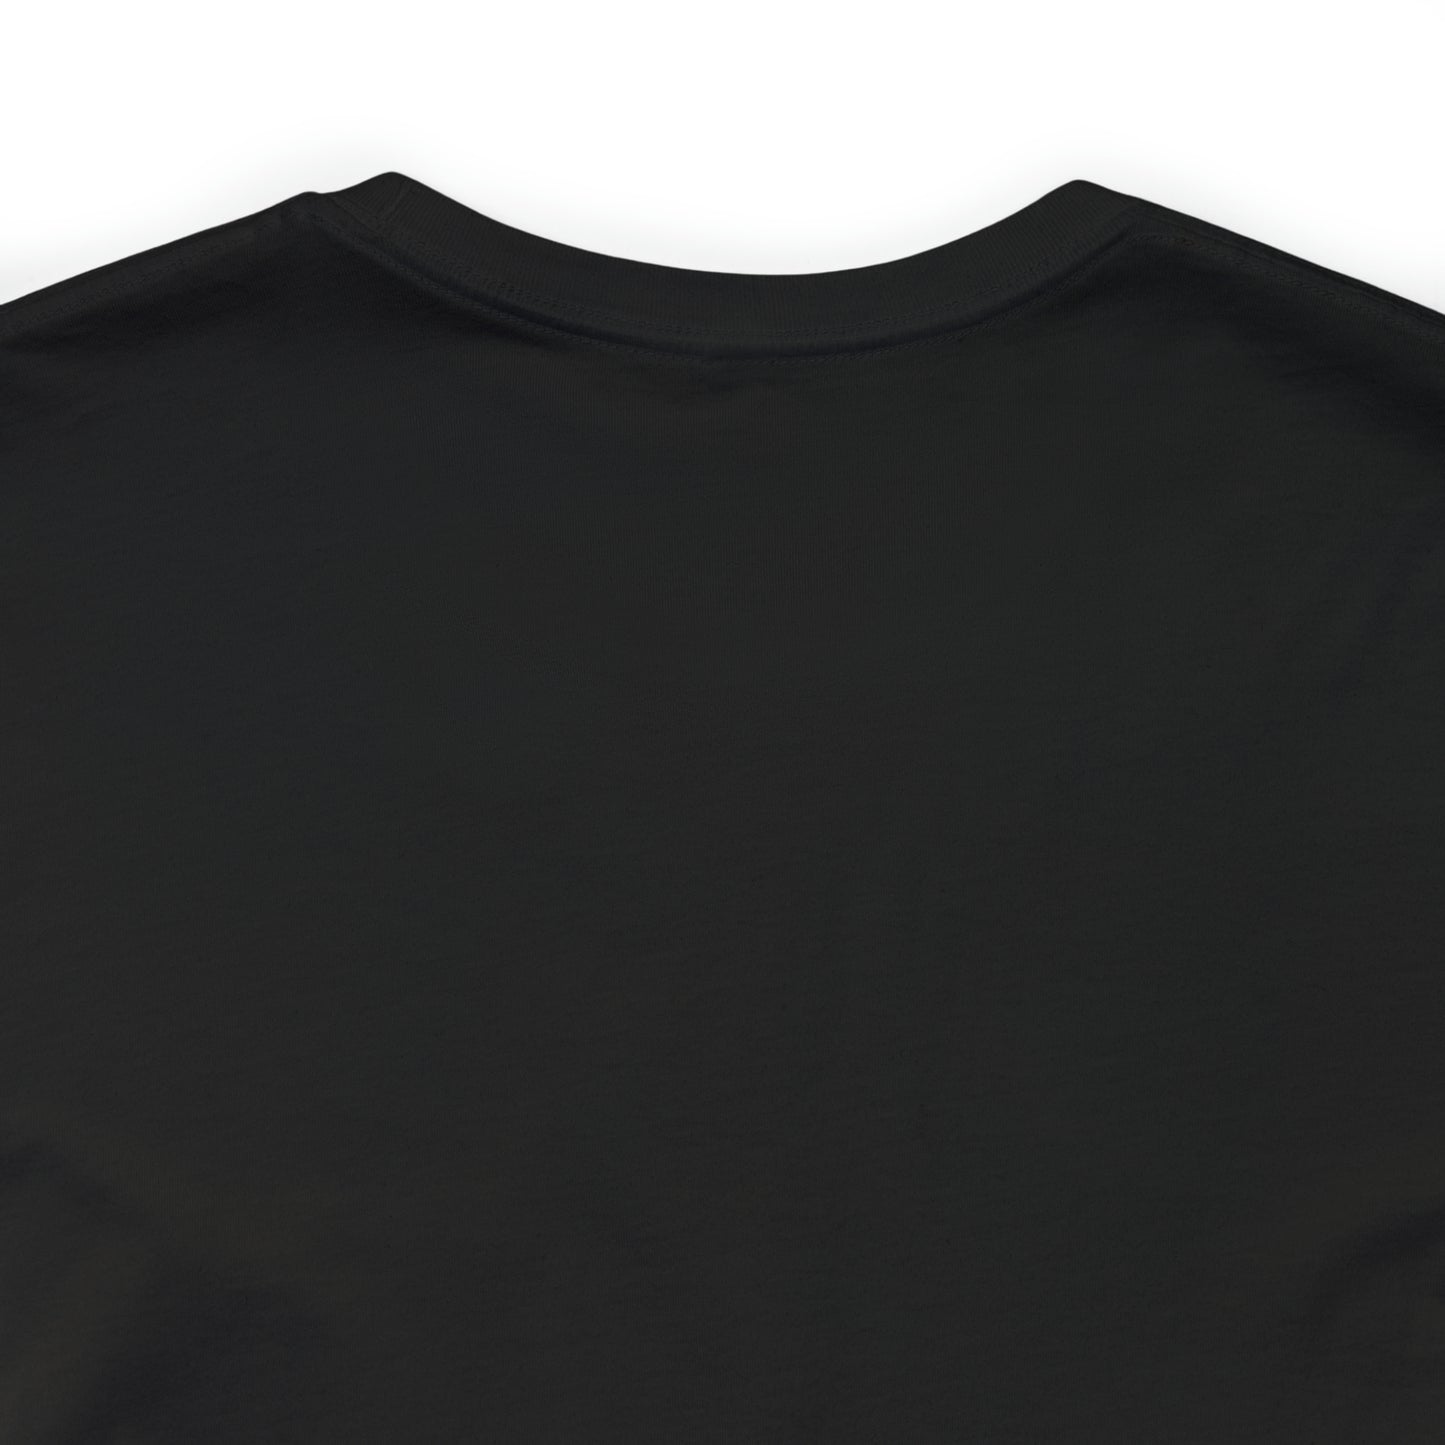 Comfy Short Sleeve T-Shirt: Dili